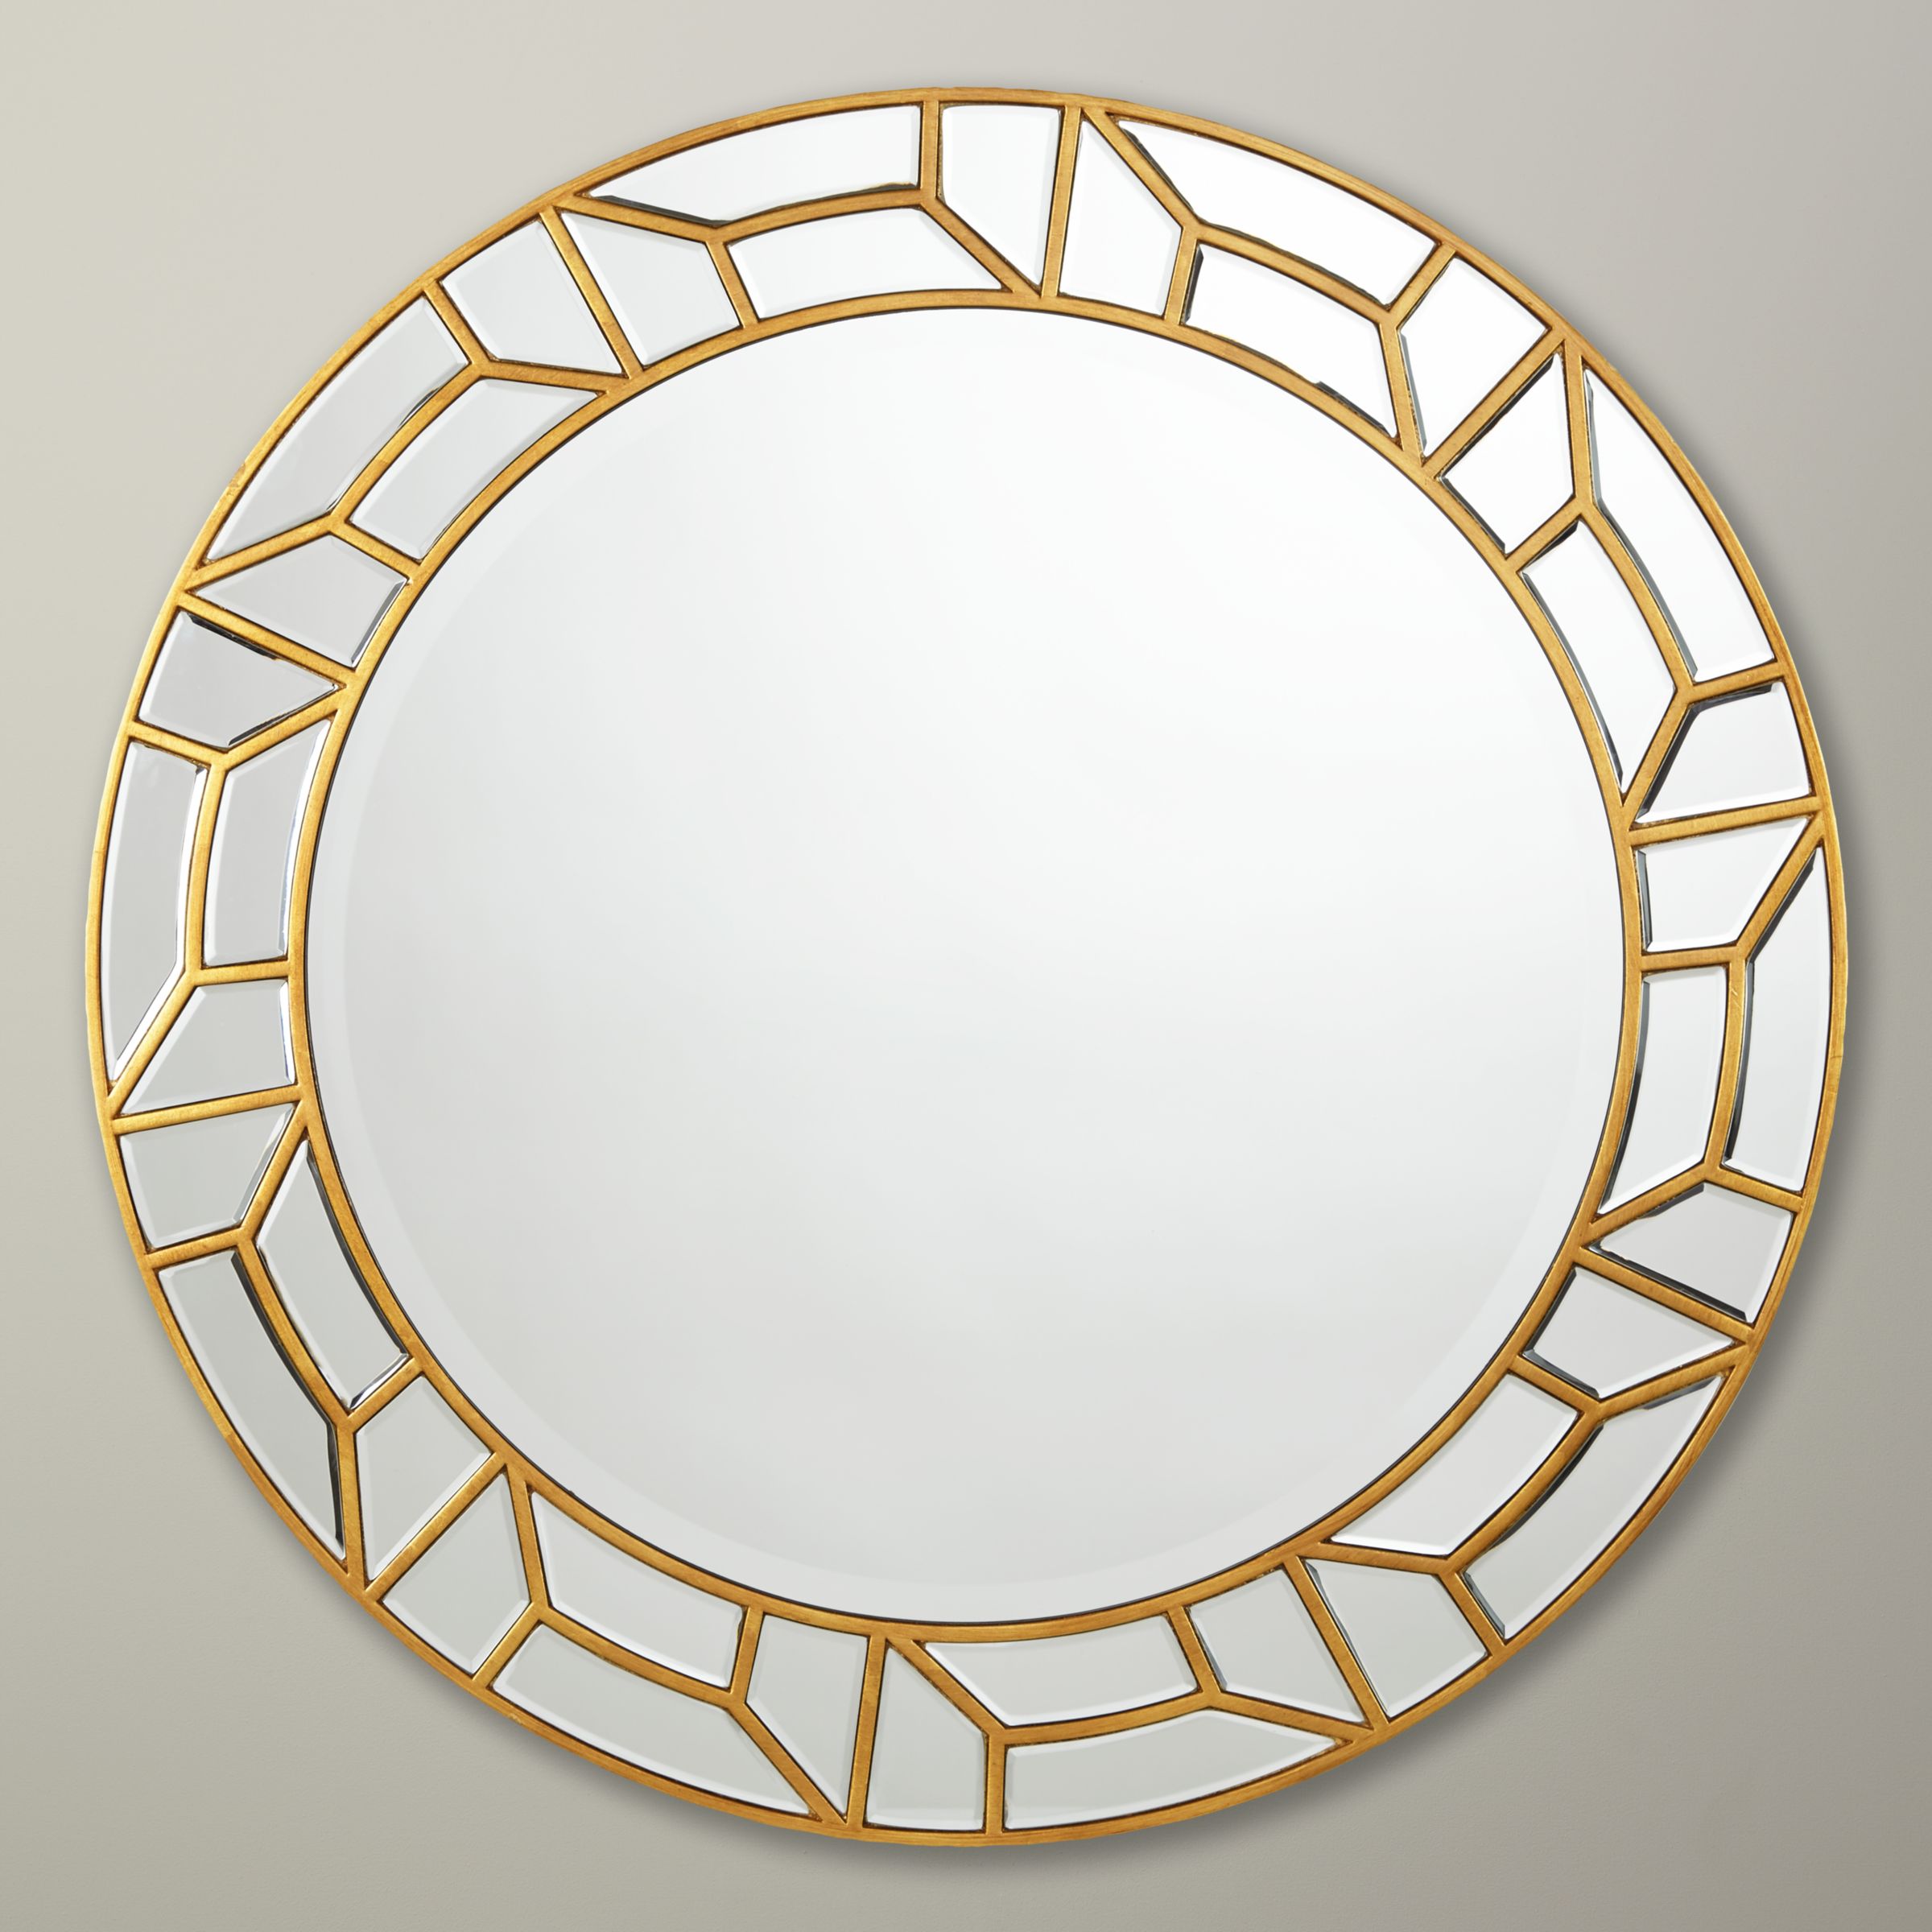 John Lewis & Partners Verbier Round Mirror, Diam.81cm, Gold